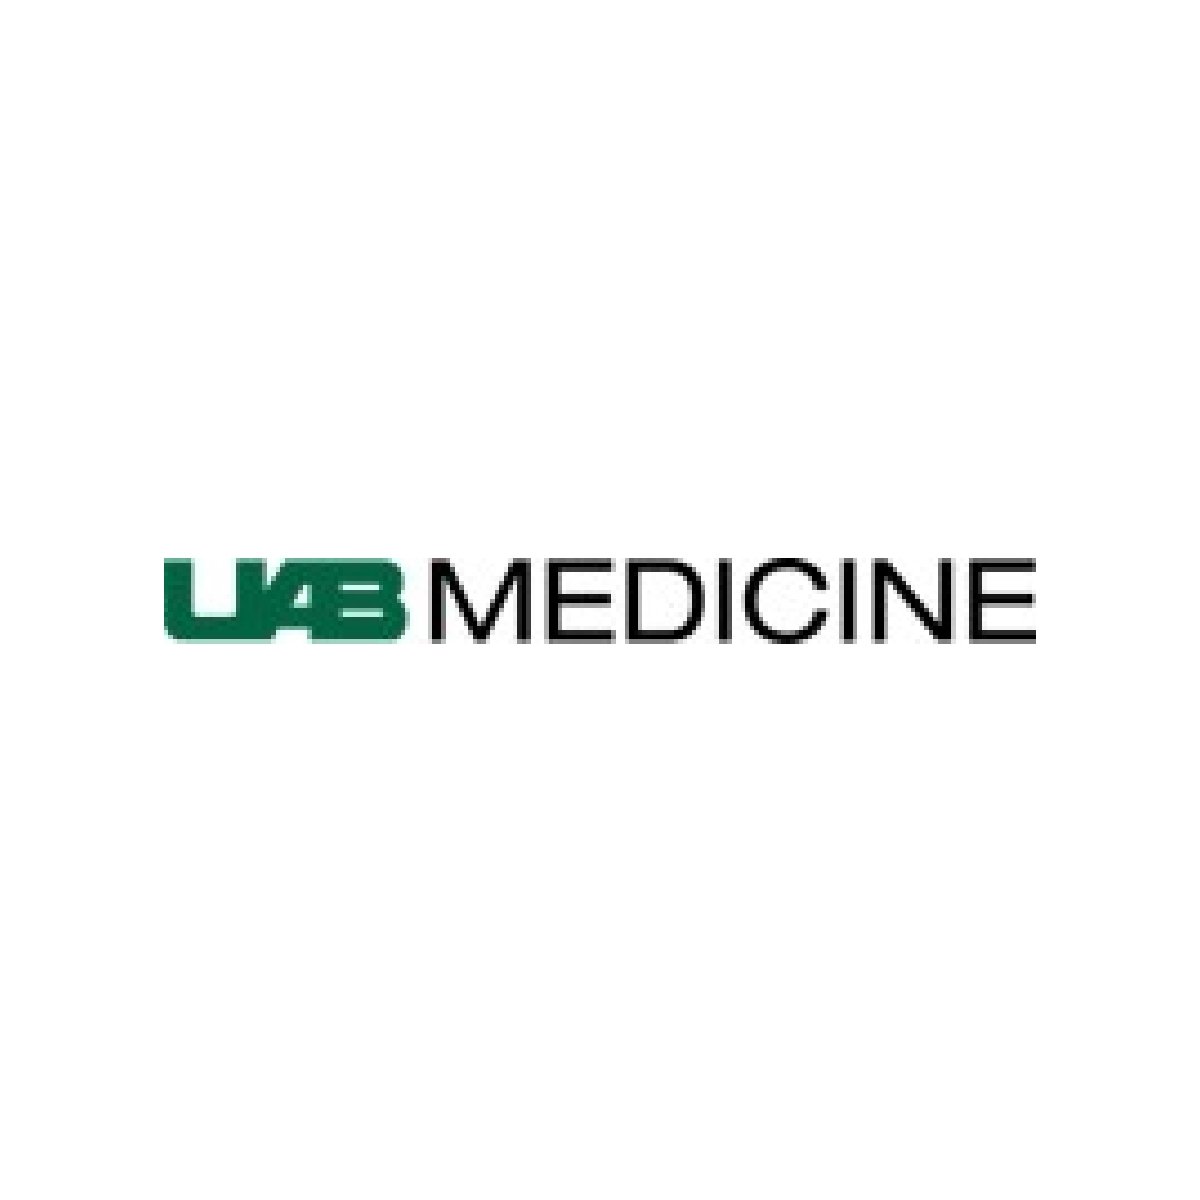 UAB Medicine logo